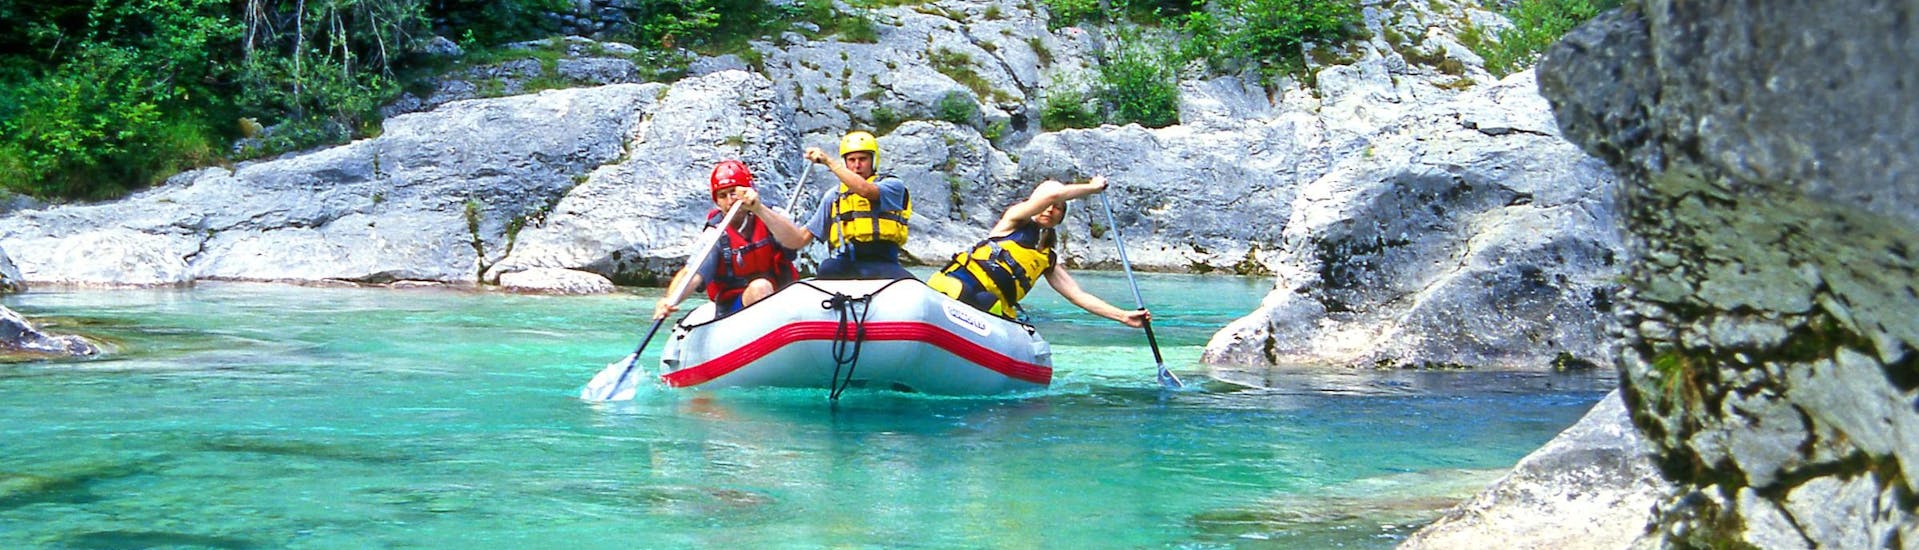 Eine Gruppe junger Menschen erfreut sich an Wildwasser Action beim Rafting & Canyoning Hotspot Fratarca.